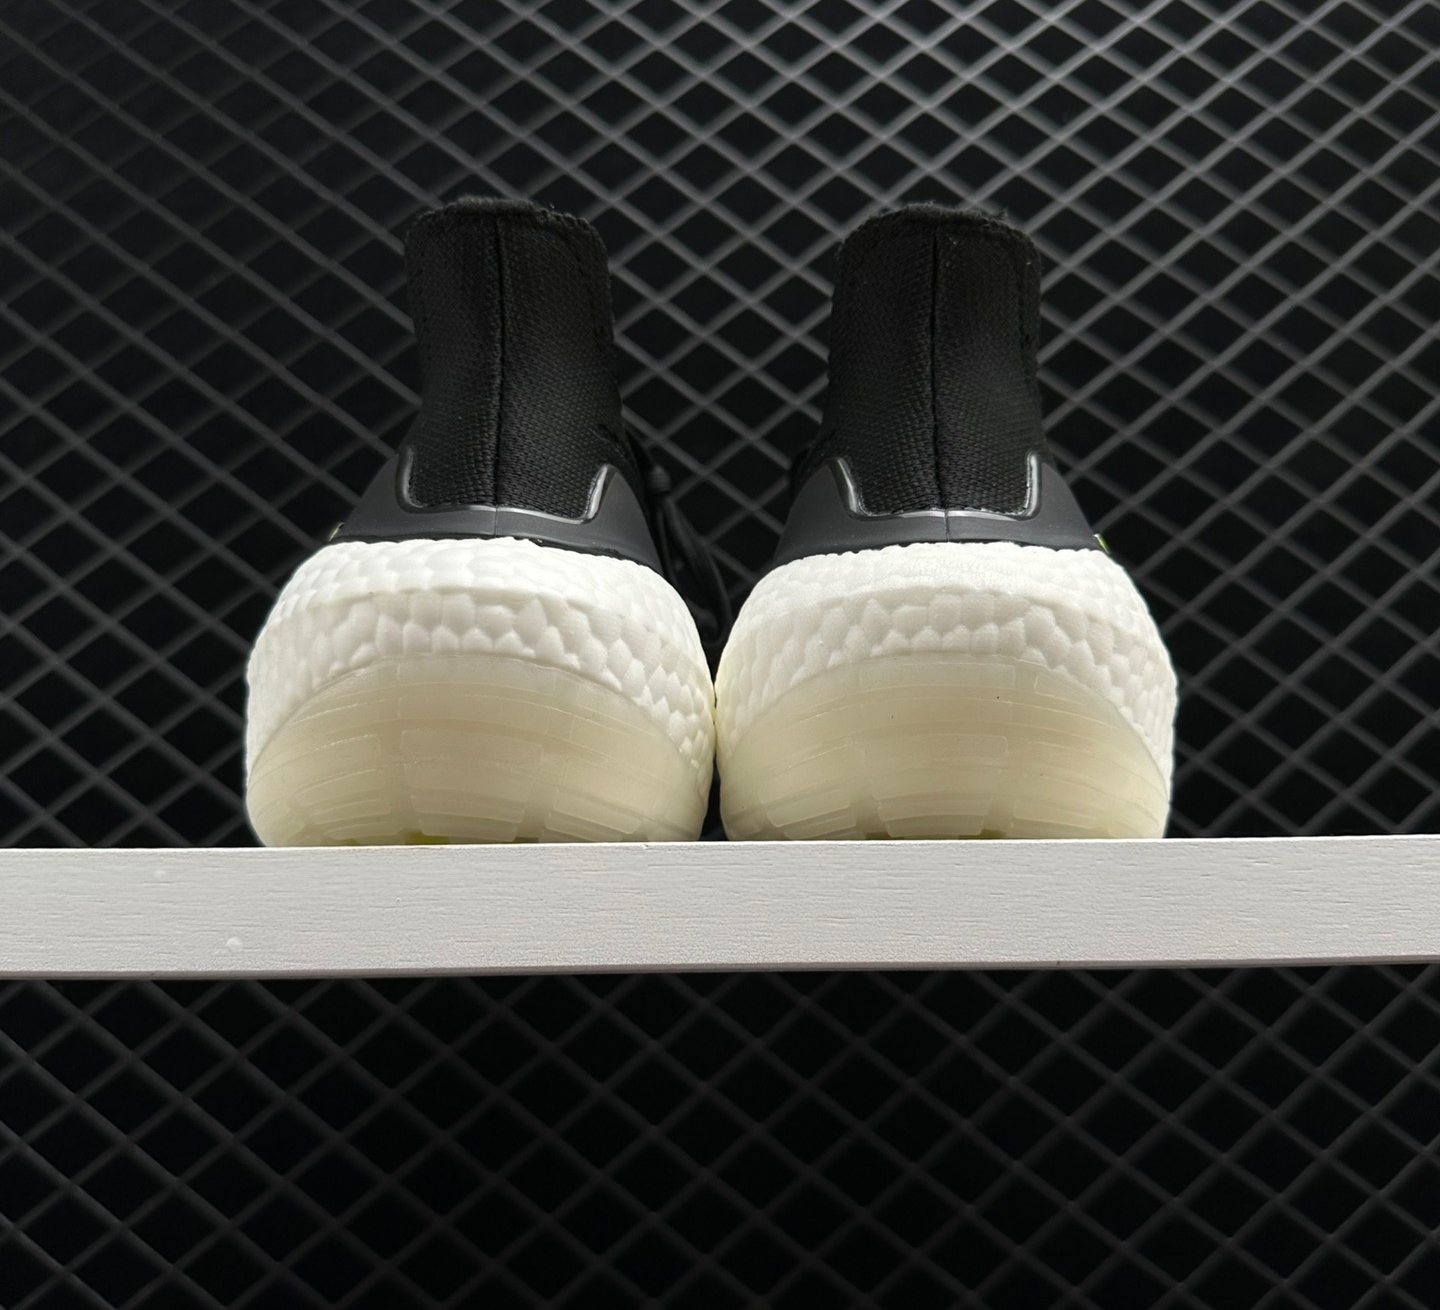 Adidas UltraBoost 21 'Black Silver Metallic' FY0374 - Sleek and Stylish Performance Footwear